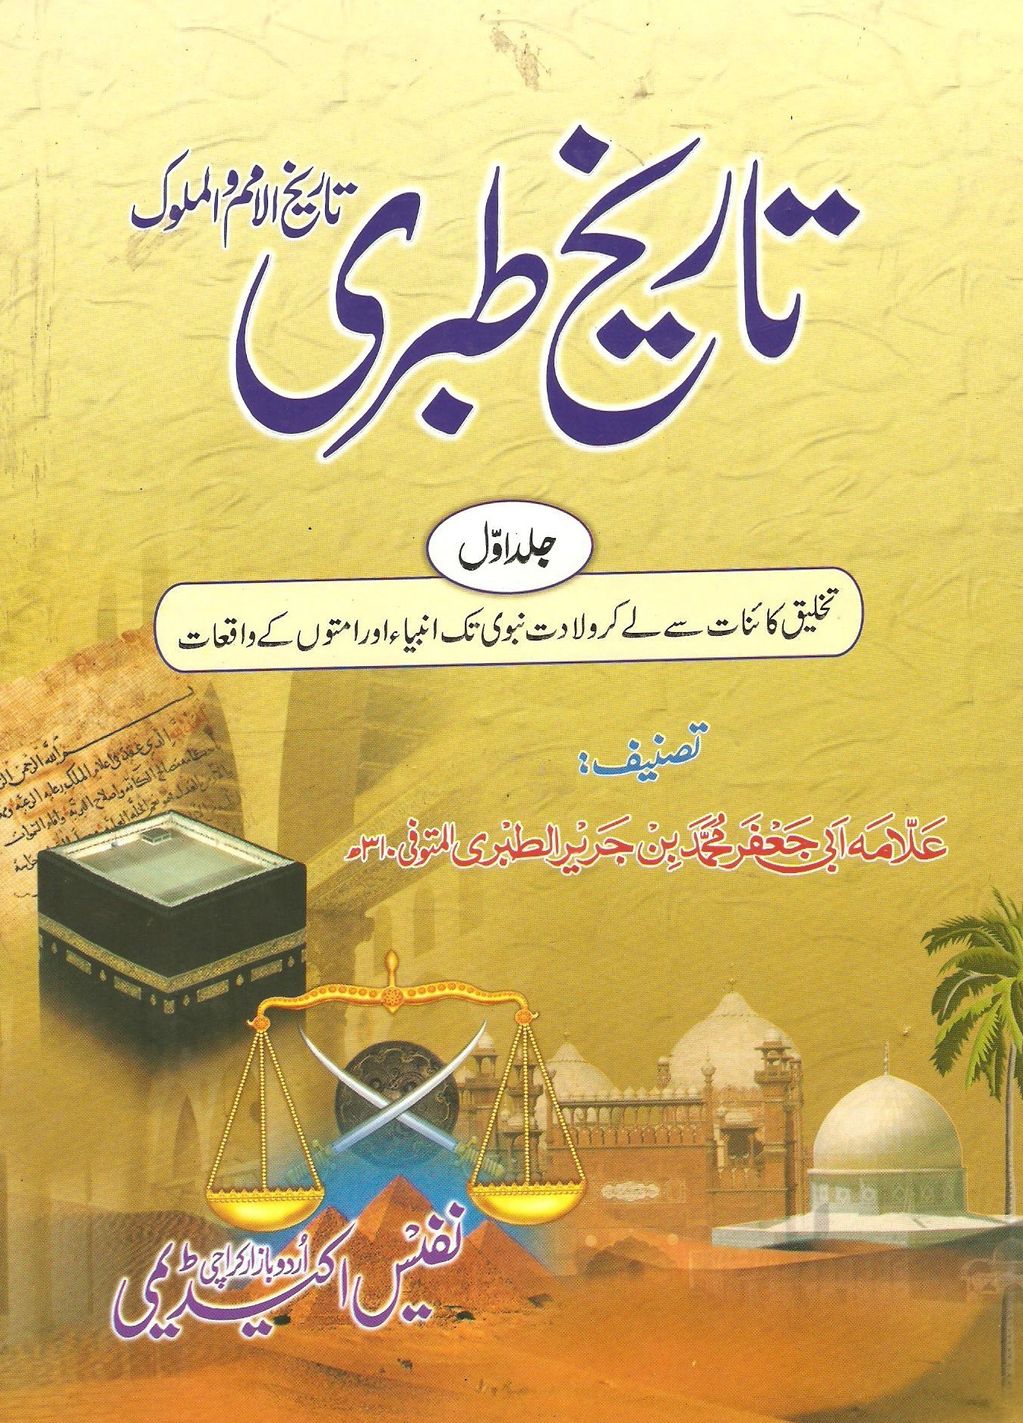 Urdu Books Novels PDF Free Download: Tareekh e Tabri Urdu Complete By